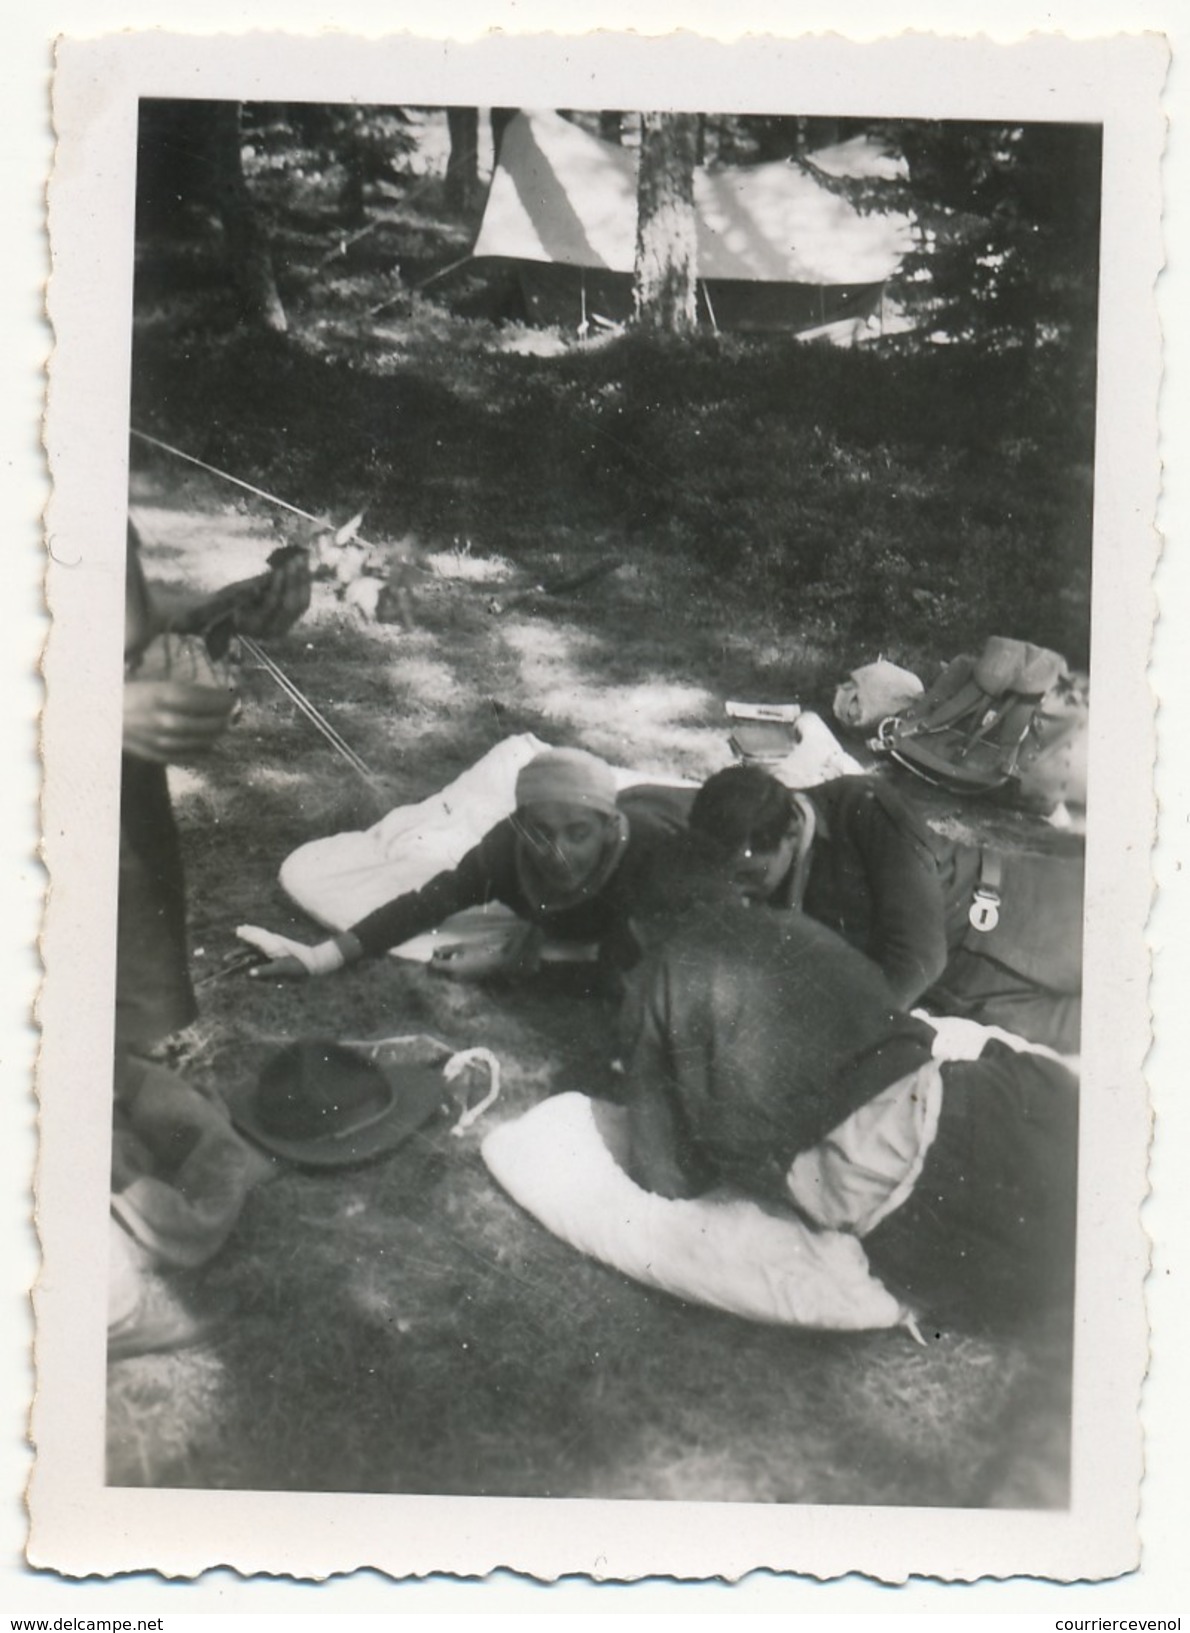 SCOUTISME - Environs MARSEILLE - 20 petites photos Scoutisme entre 1940 et 1942